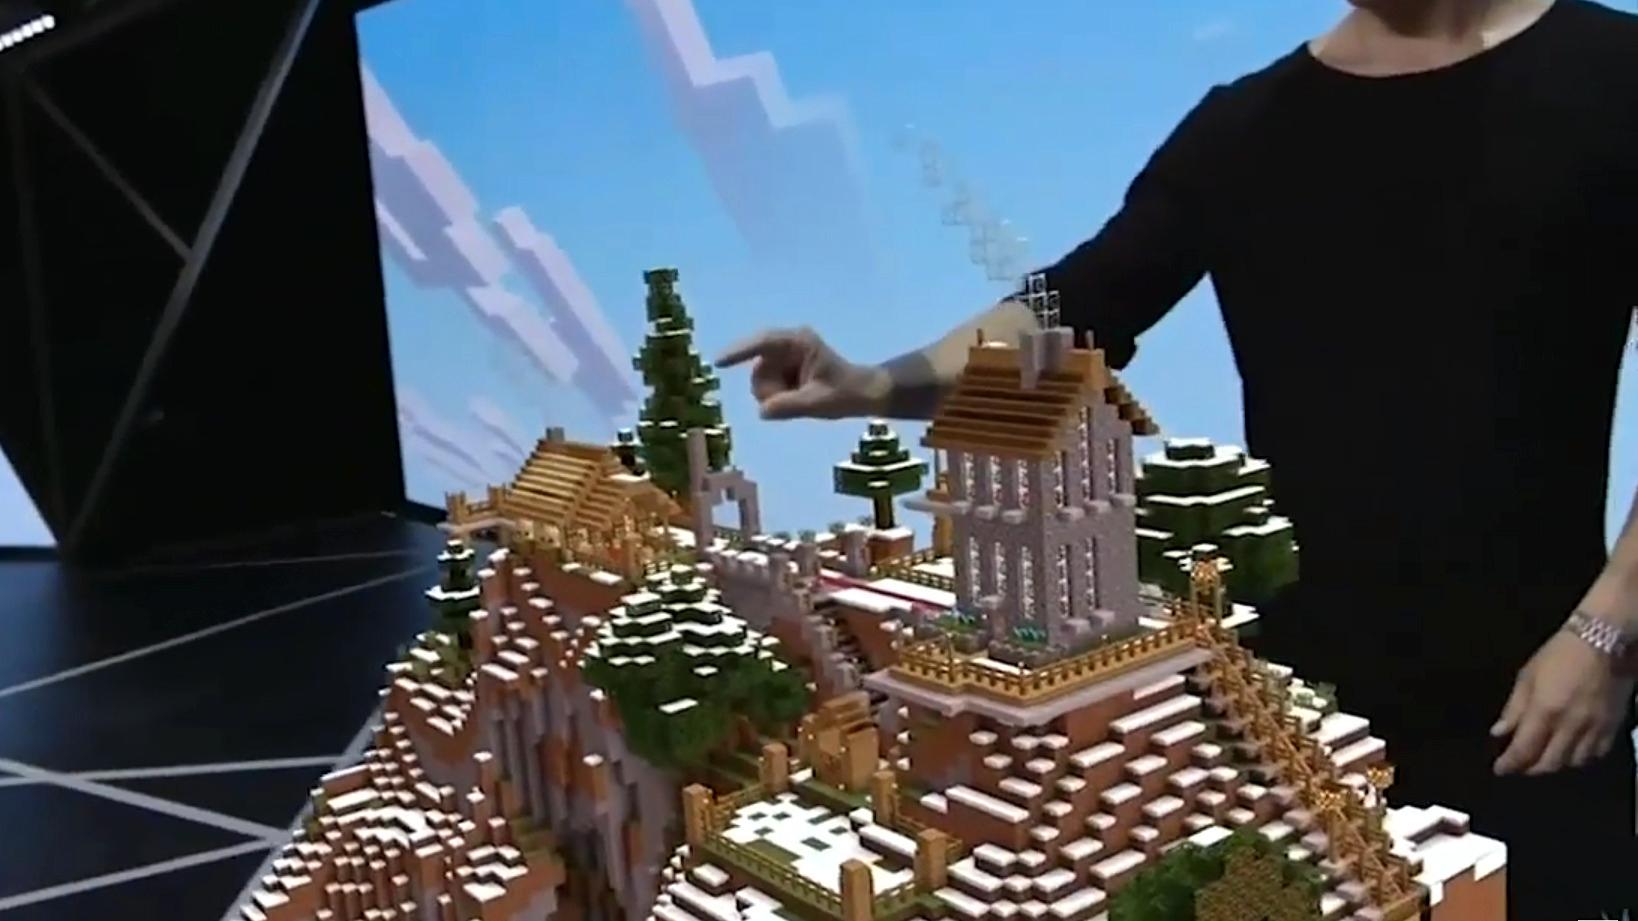 Se Minecrafts verden bli til på stuebordet